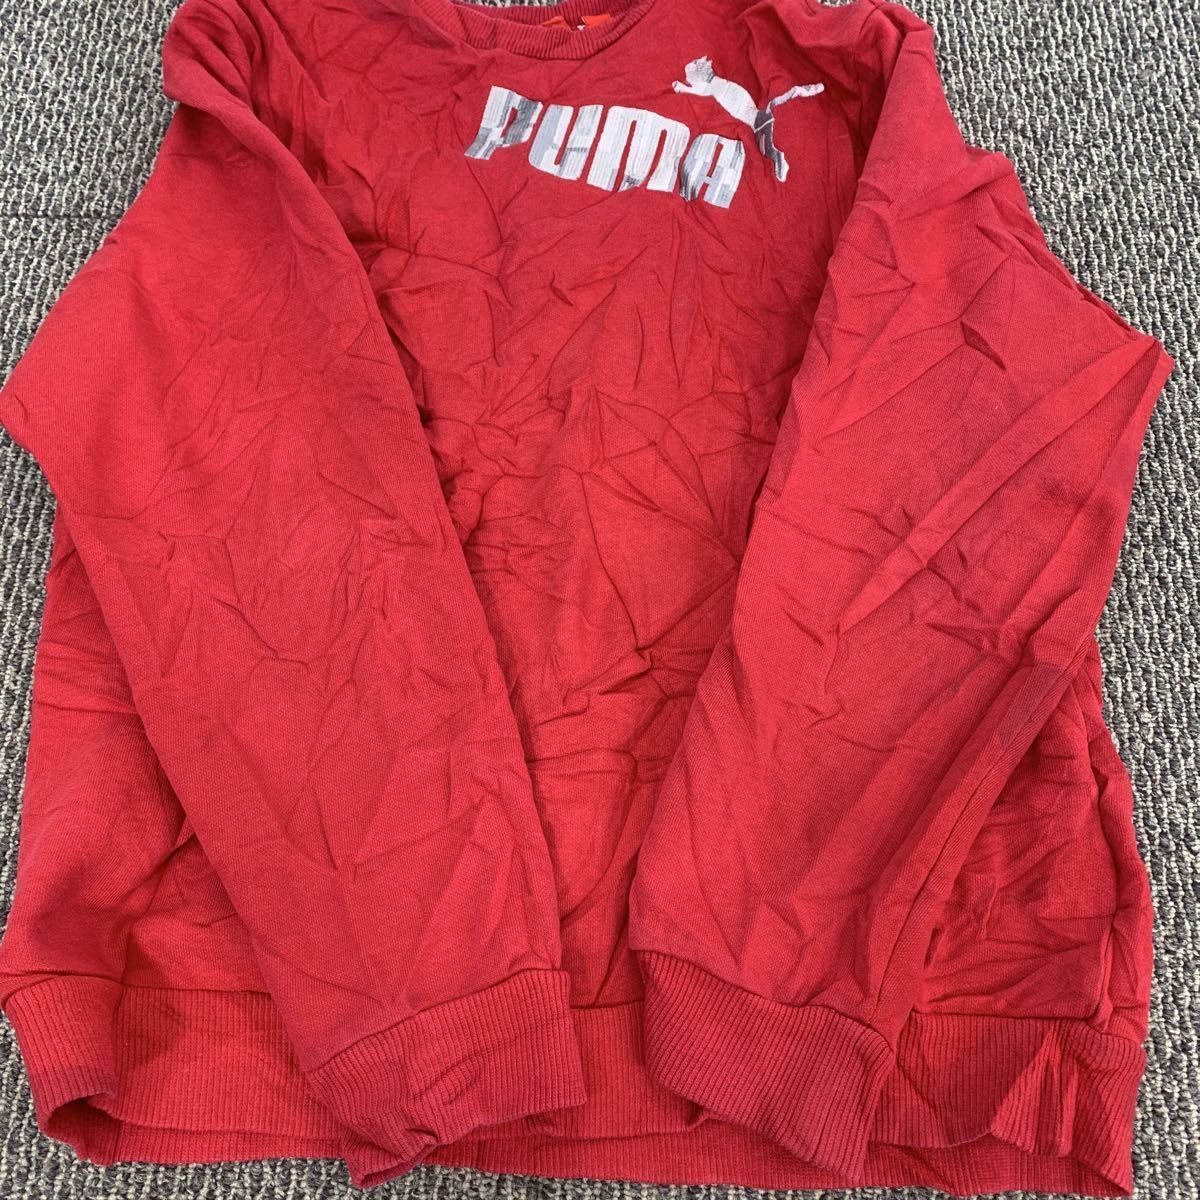 PUMA sweat sweatshirt Kids L 152cm red Puma Logo sport old clothes . America buying up t2110-3644